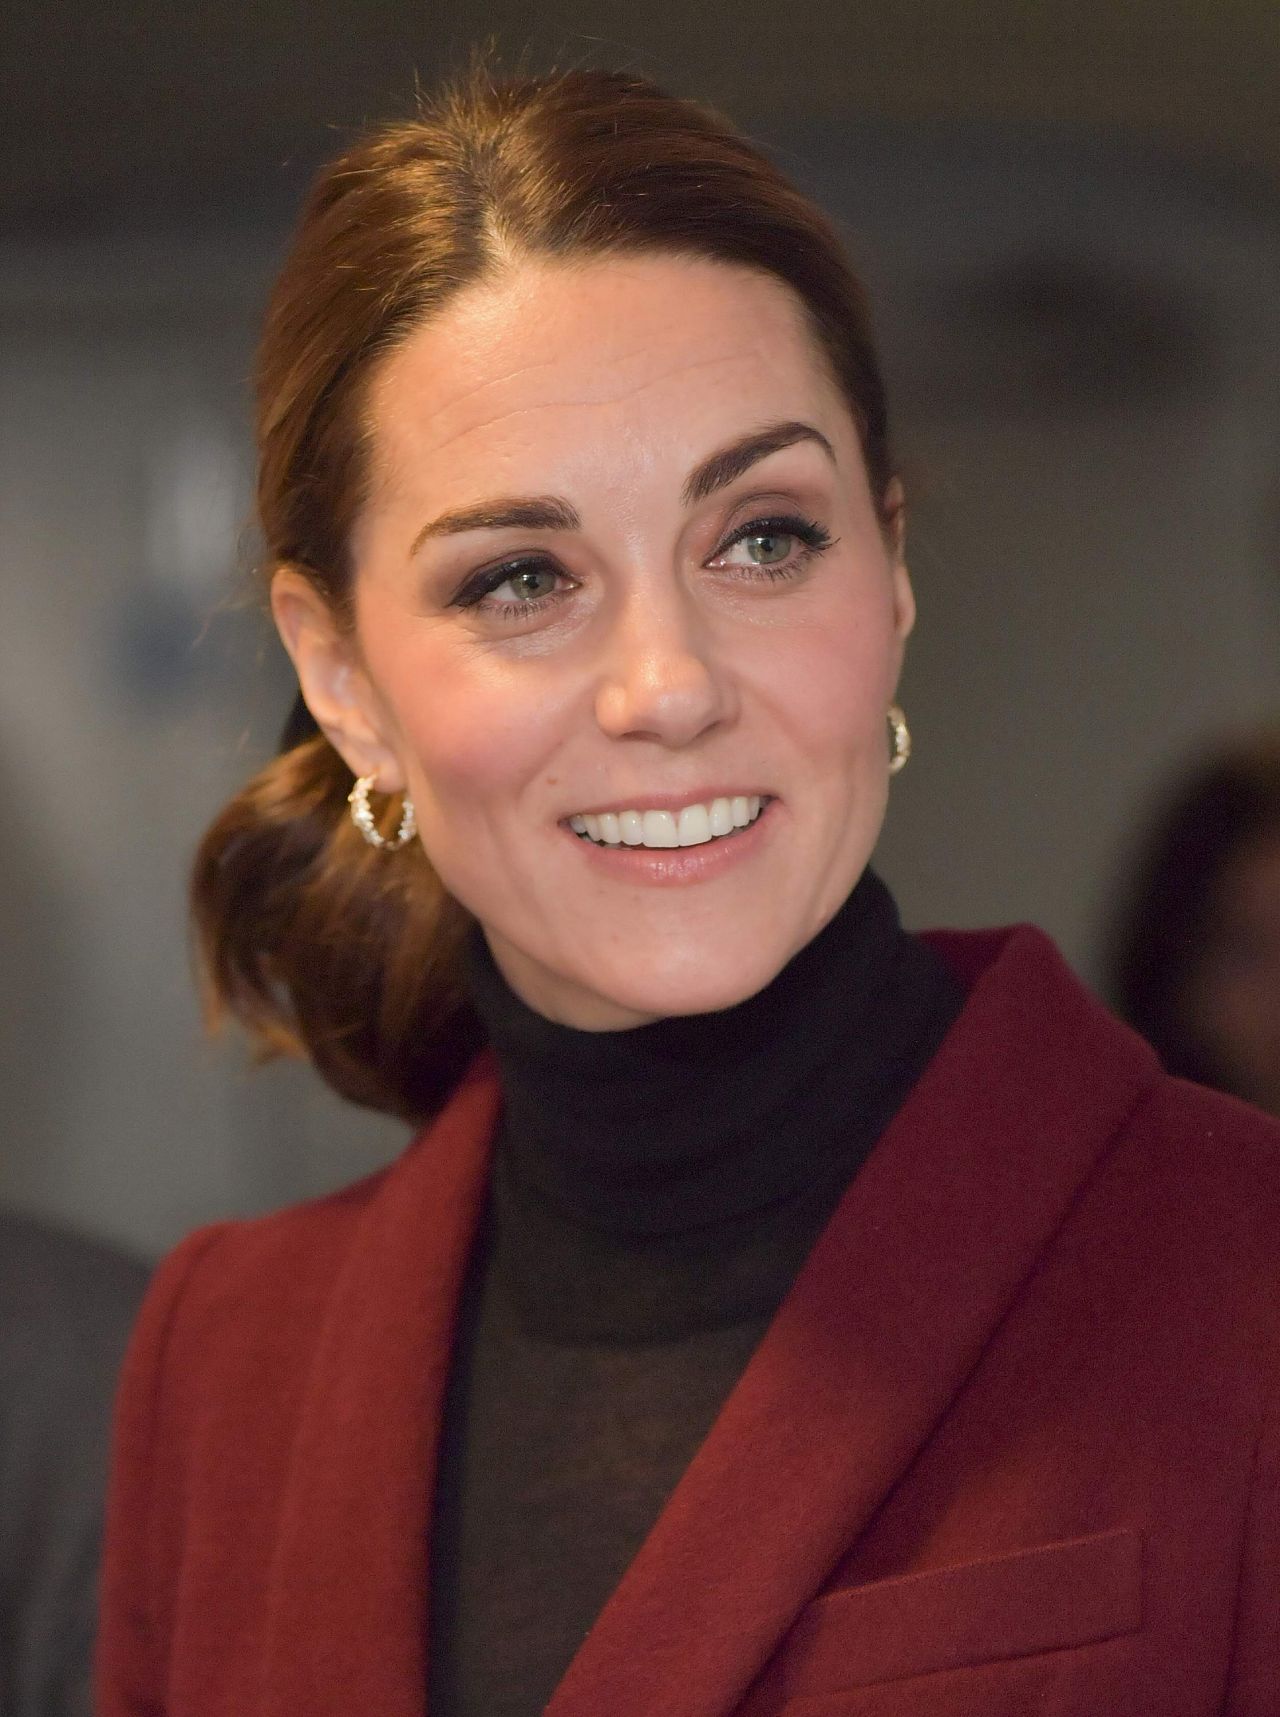 Kate Middleton - Vistis a Developmental Neuroscience Lab in London 11 ...